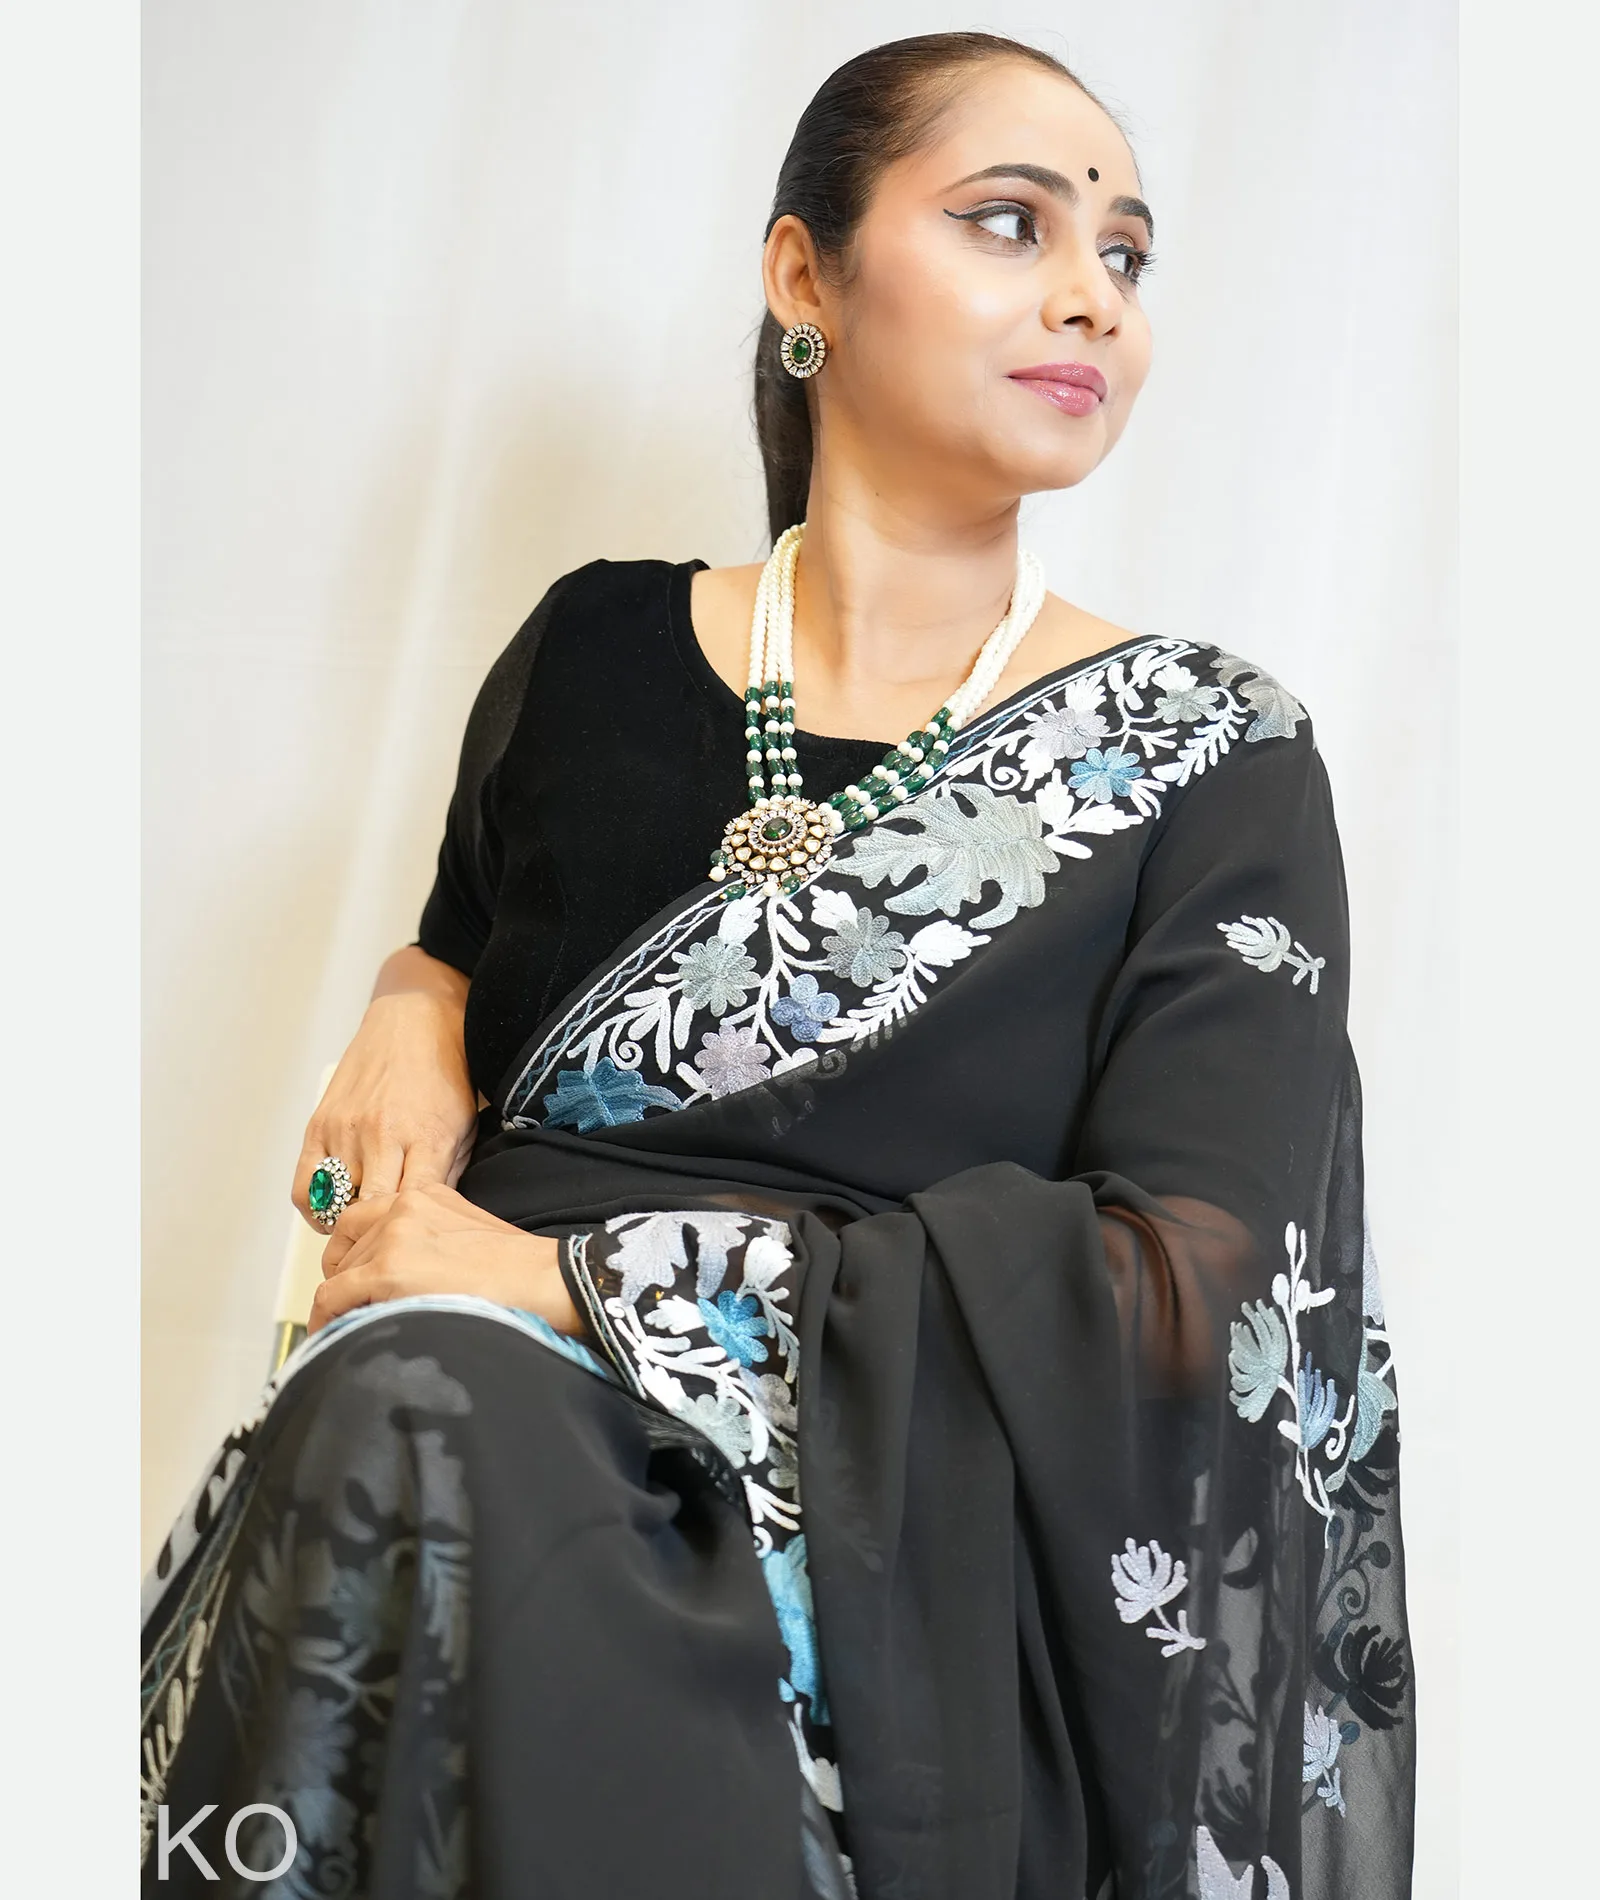 Chinar Aari Embroidered Black Georgette Saree